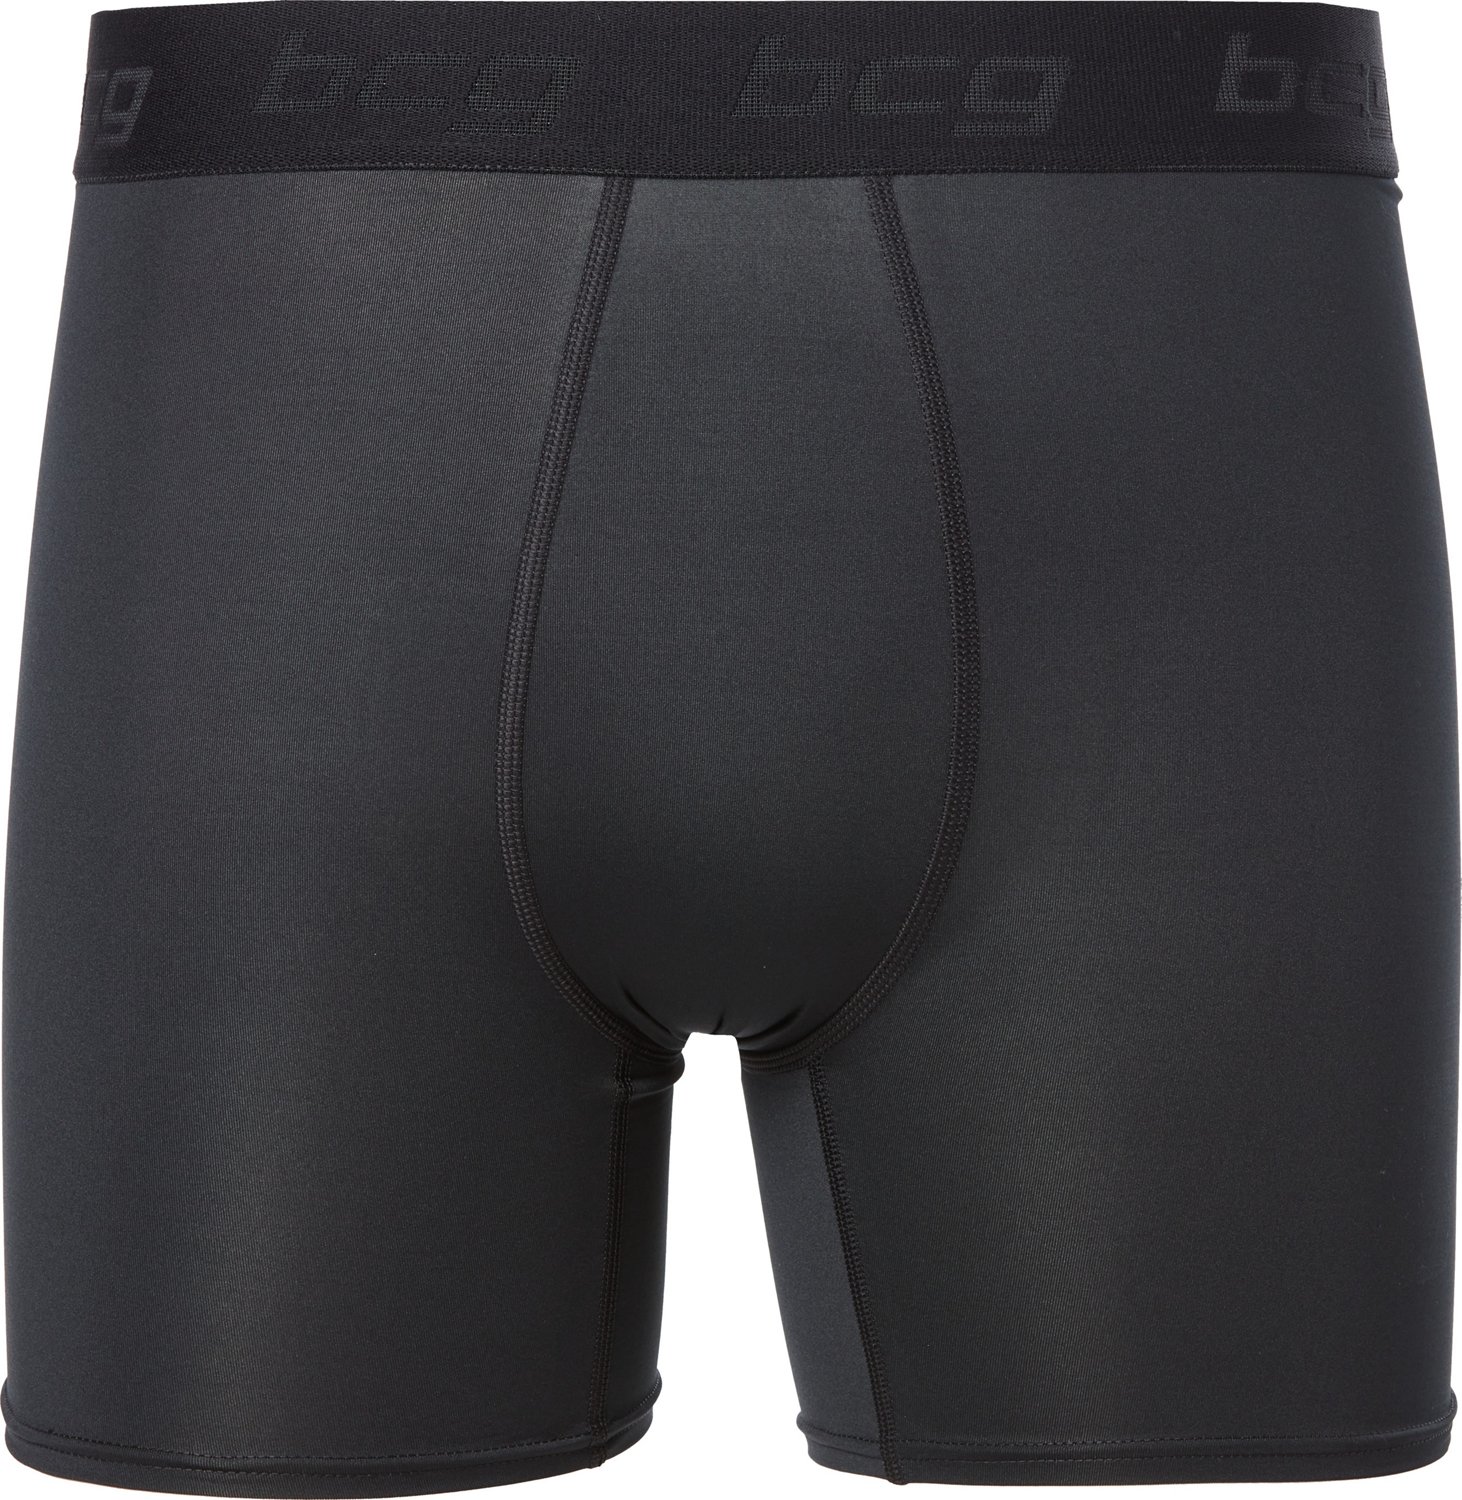 BCG Men's Athletic Compression Solid Brief Shorts 6 in